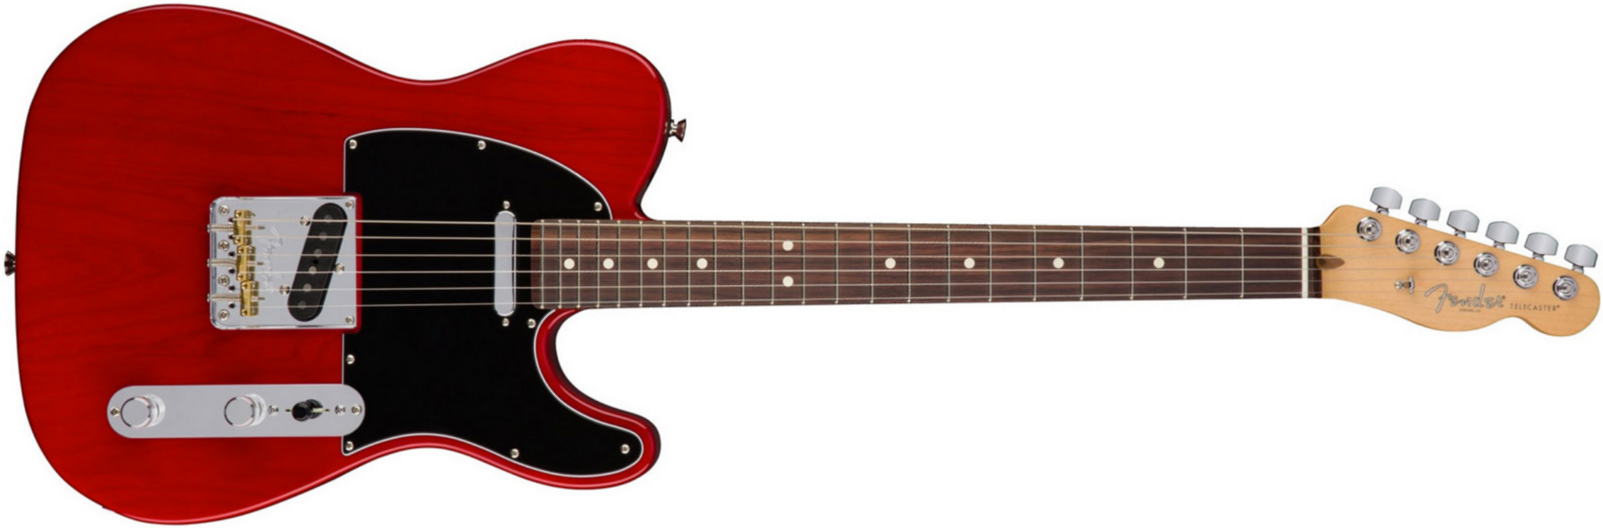 Fender Tele American Professional 2s Usa Rw - Crimson Red Transparent - Str shape electric guitar - Main picture